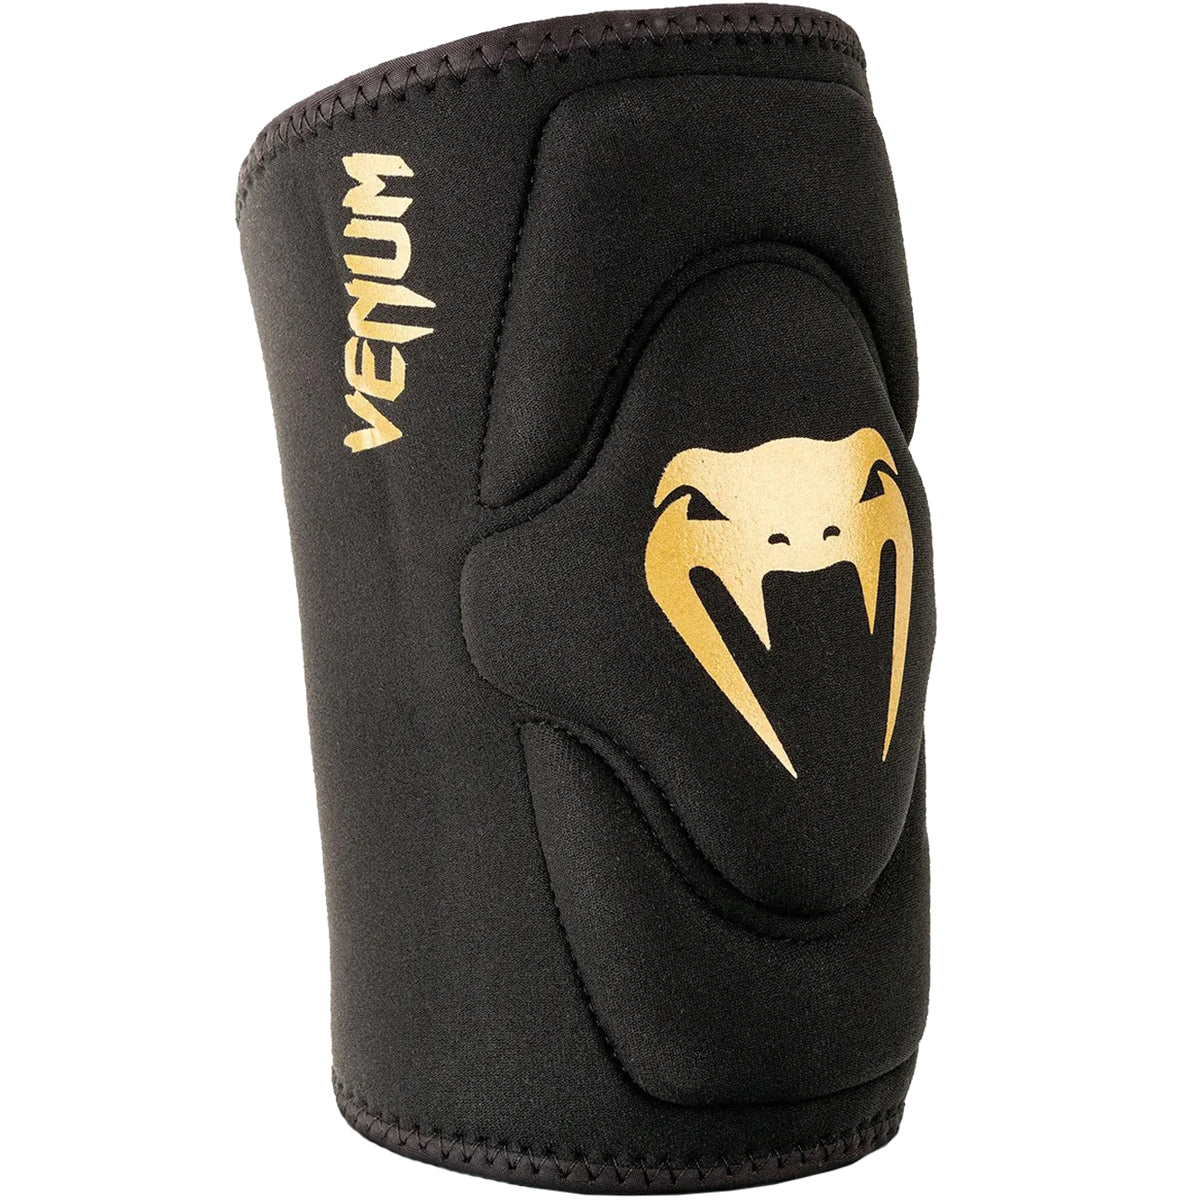 Venum Kontact Boxing Gel Knee Pad - Black/Gold Venum